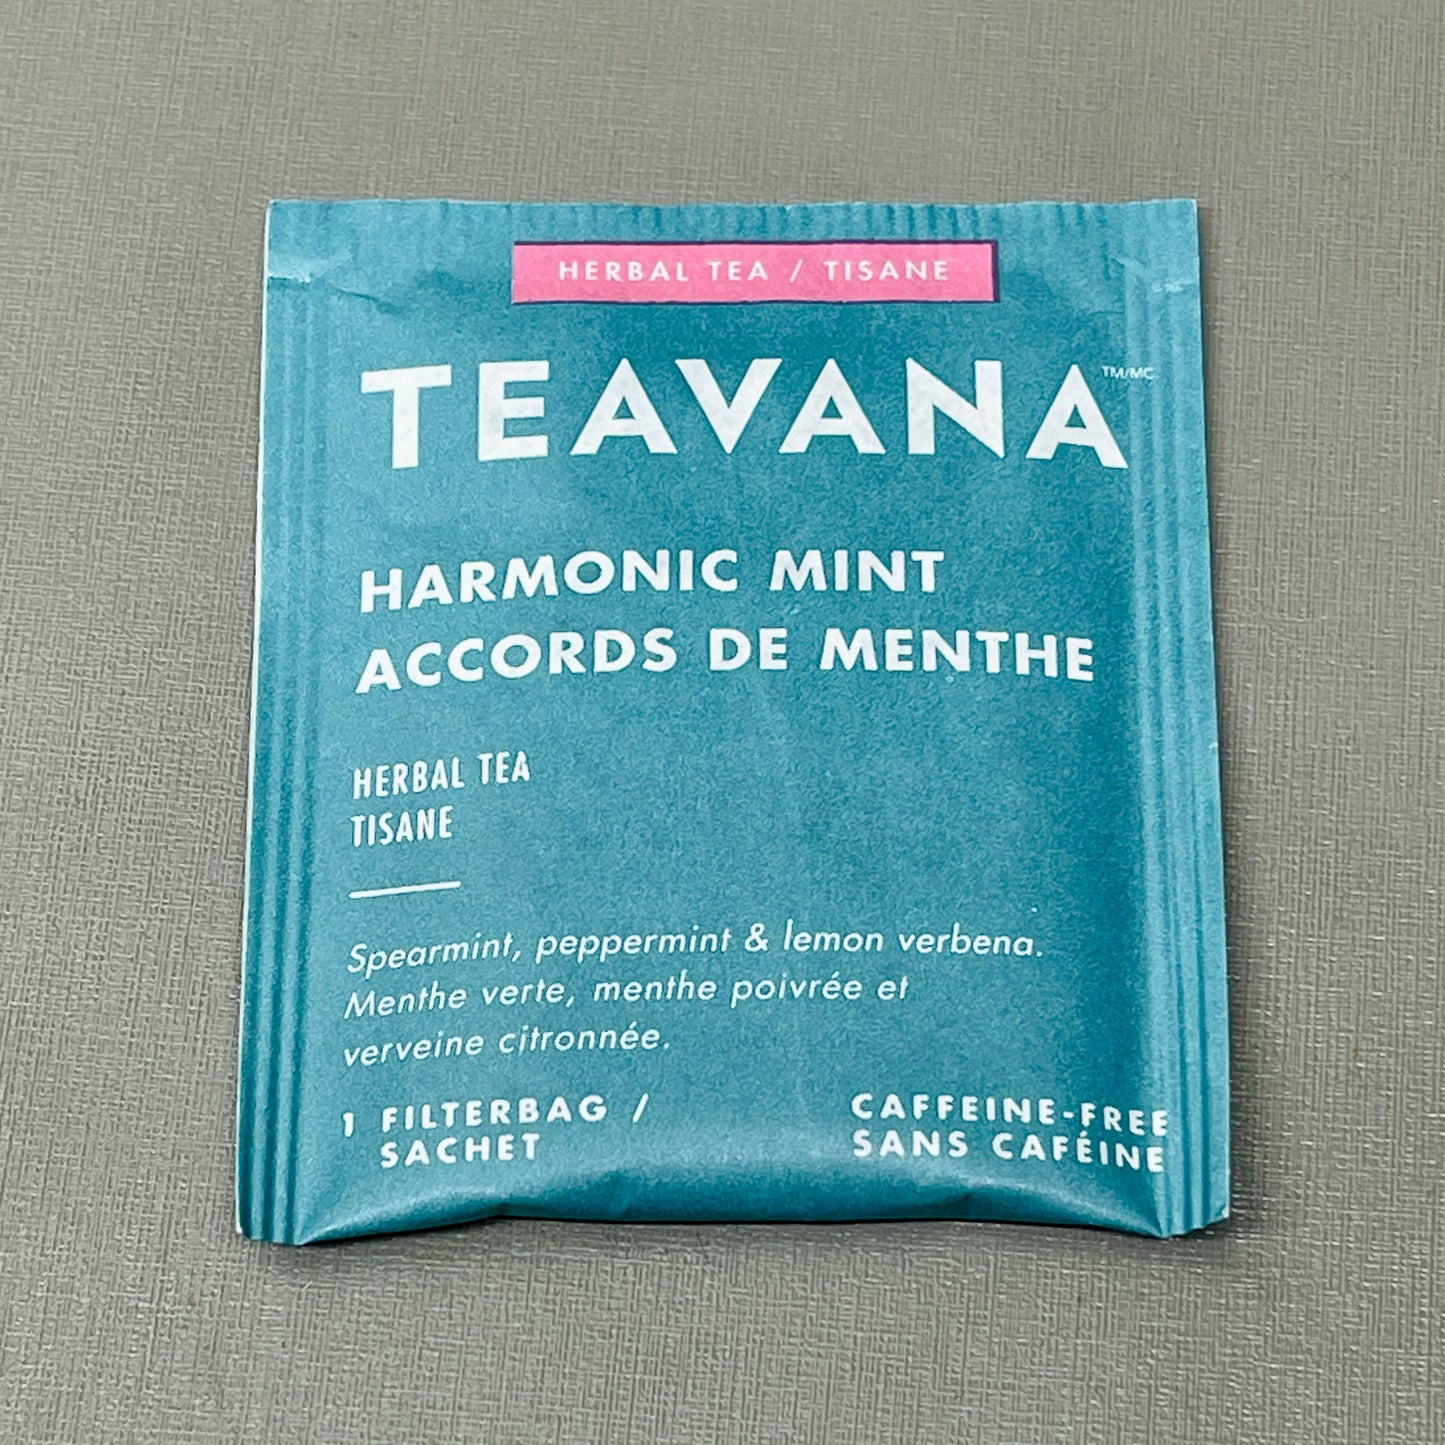 STARBUCKS Teavana Harmonic Mint Herbal Tea Box of 24 -1.3g Bags BB 03/24 (New)